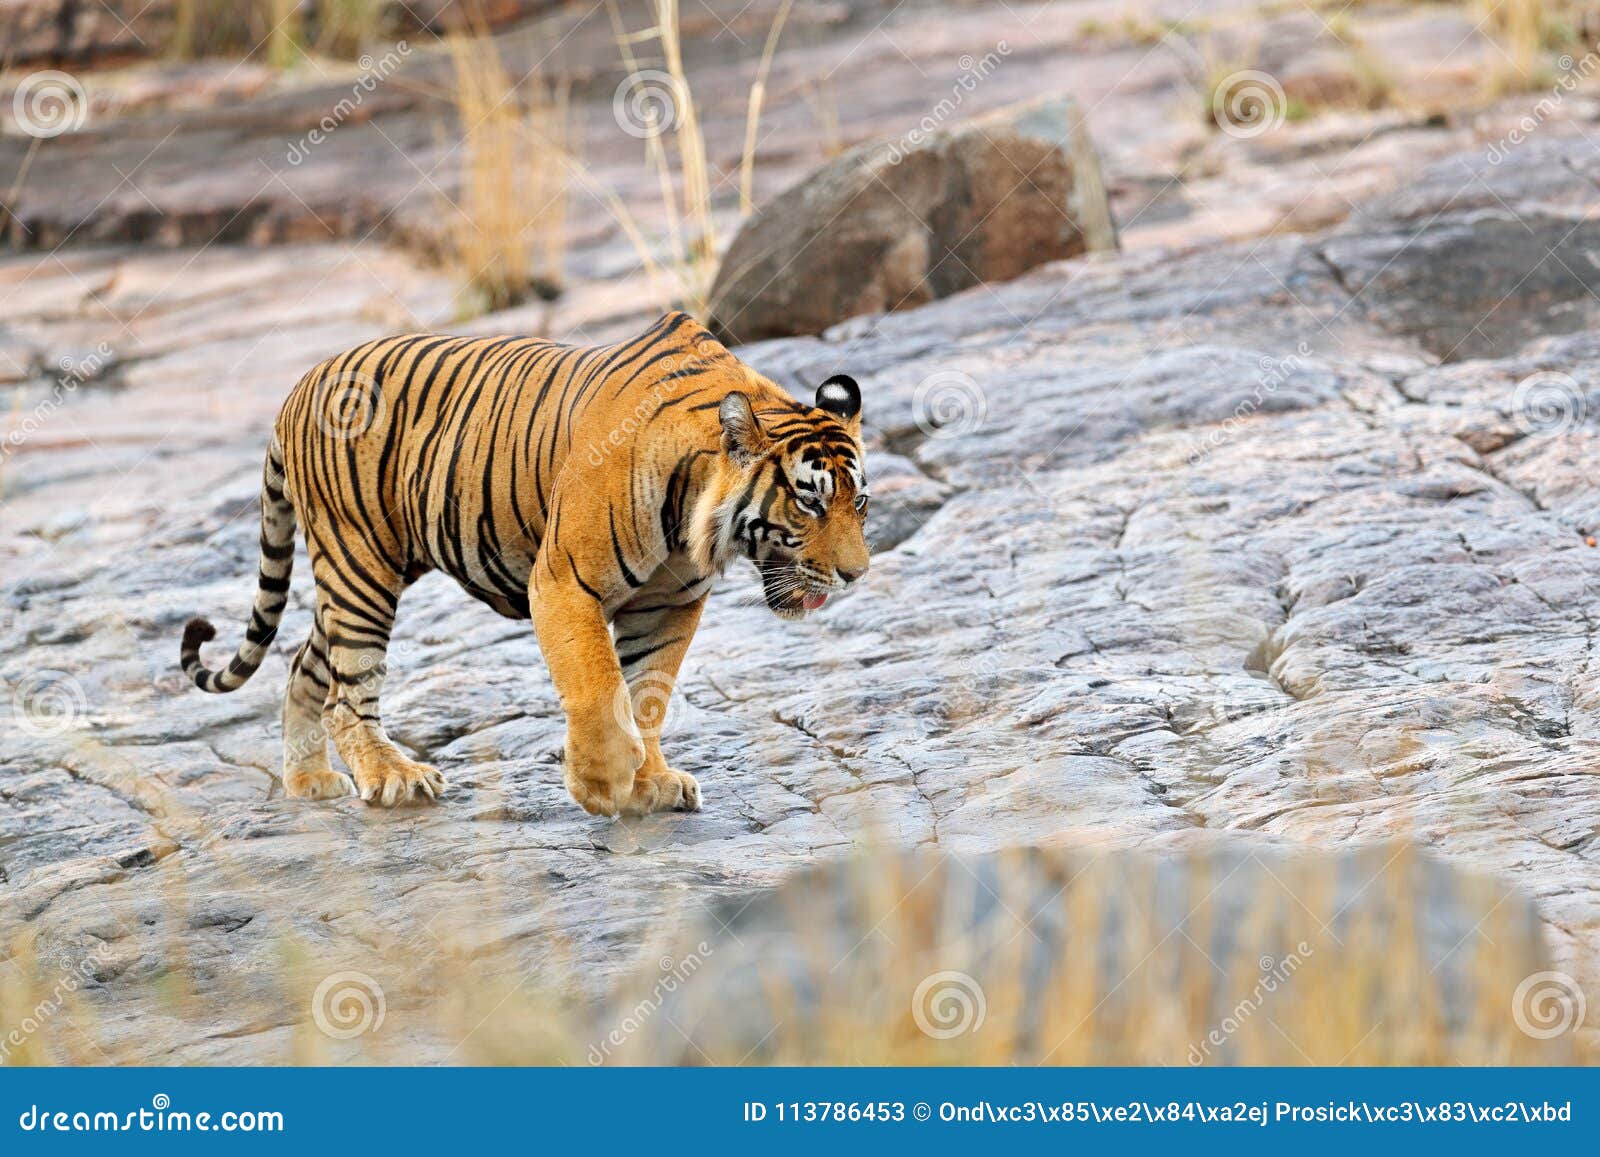 Animals in danger at present. Тигр шагает. Бенгальский тигр Индия. Шагающий тигр образ. Male Tiger walk.